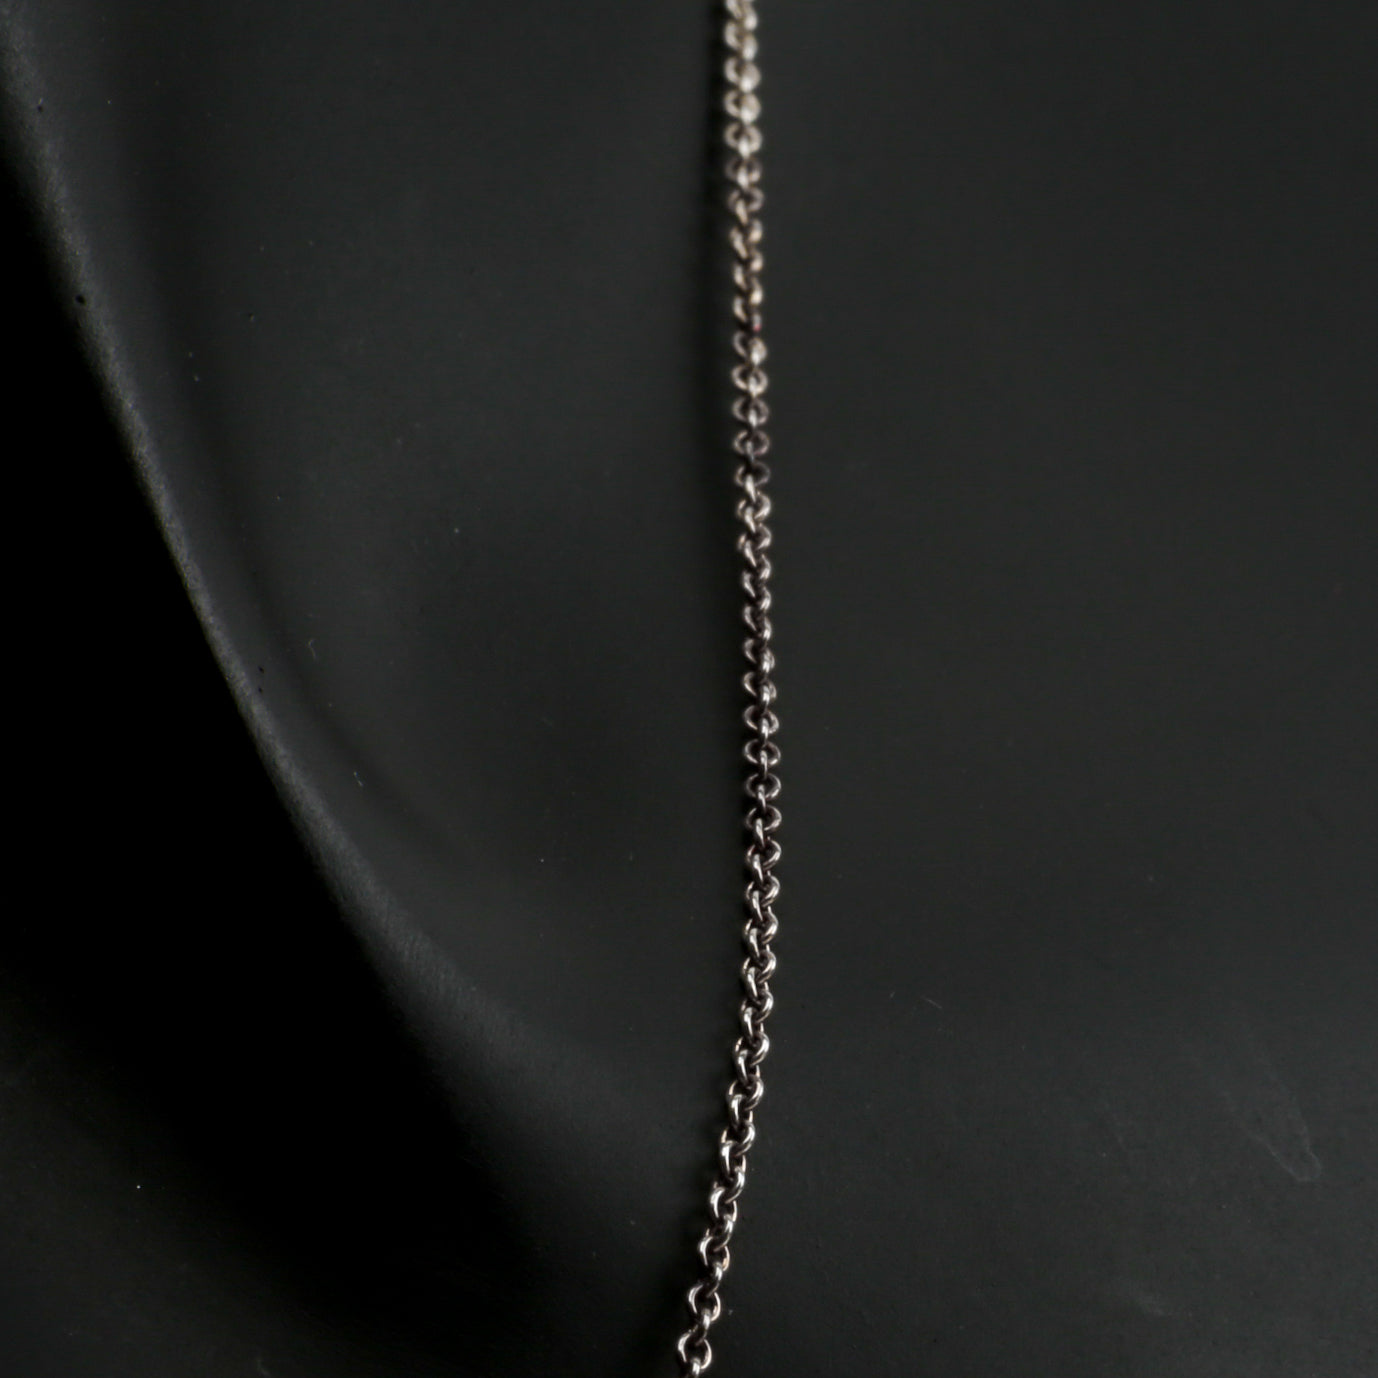 TIFFANY & CO. Initial "T" Pendant Necklace - FINAL SALE